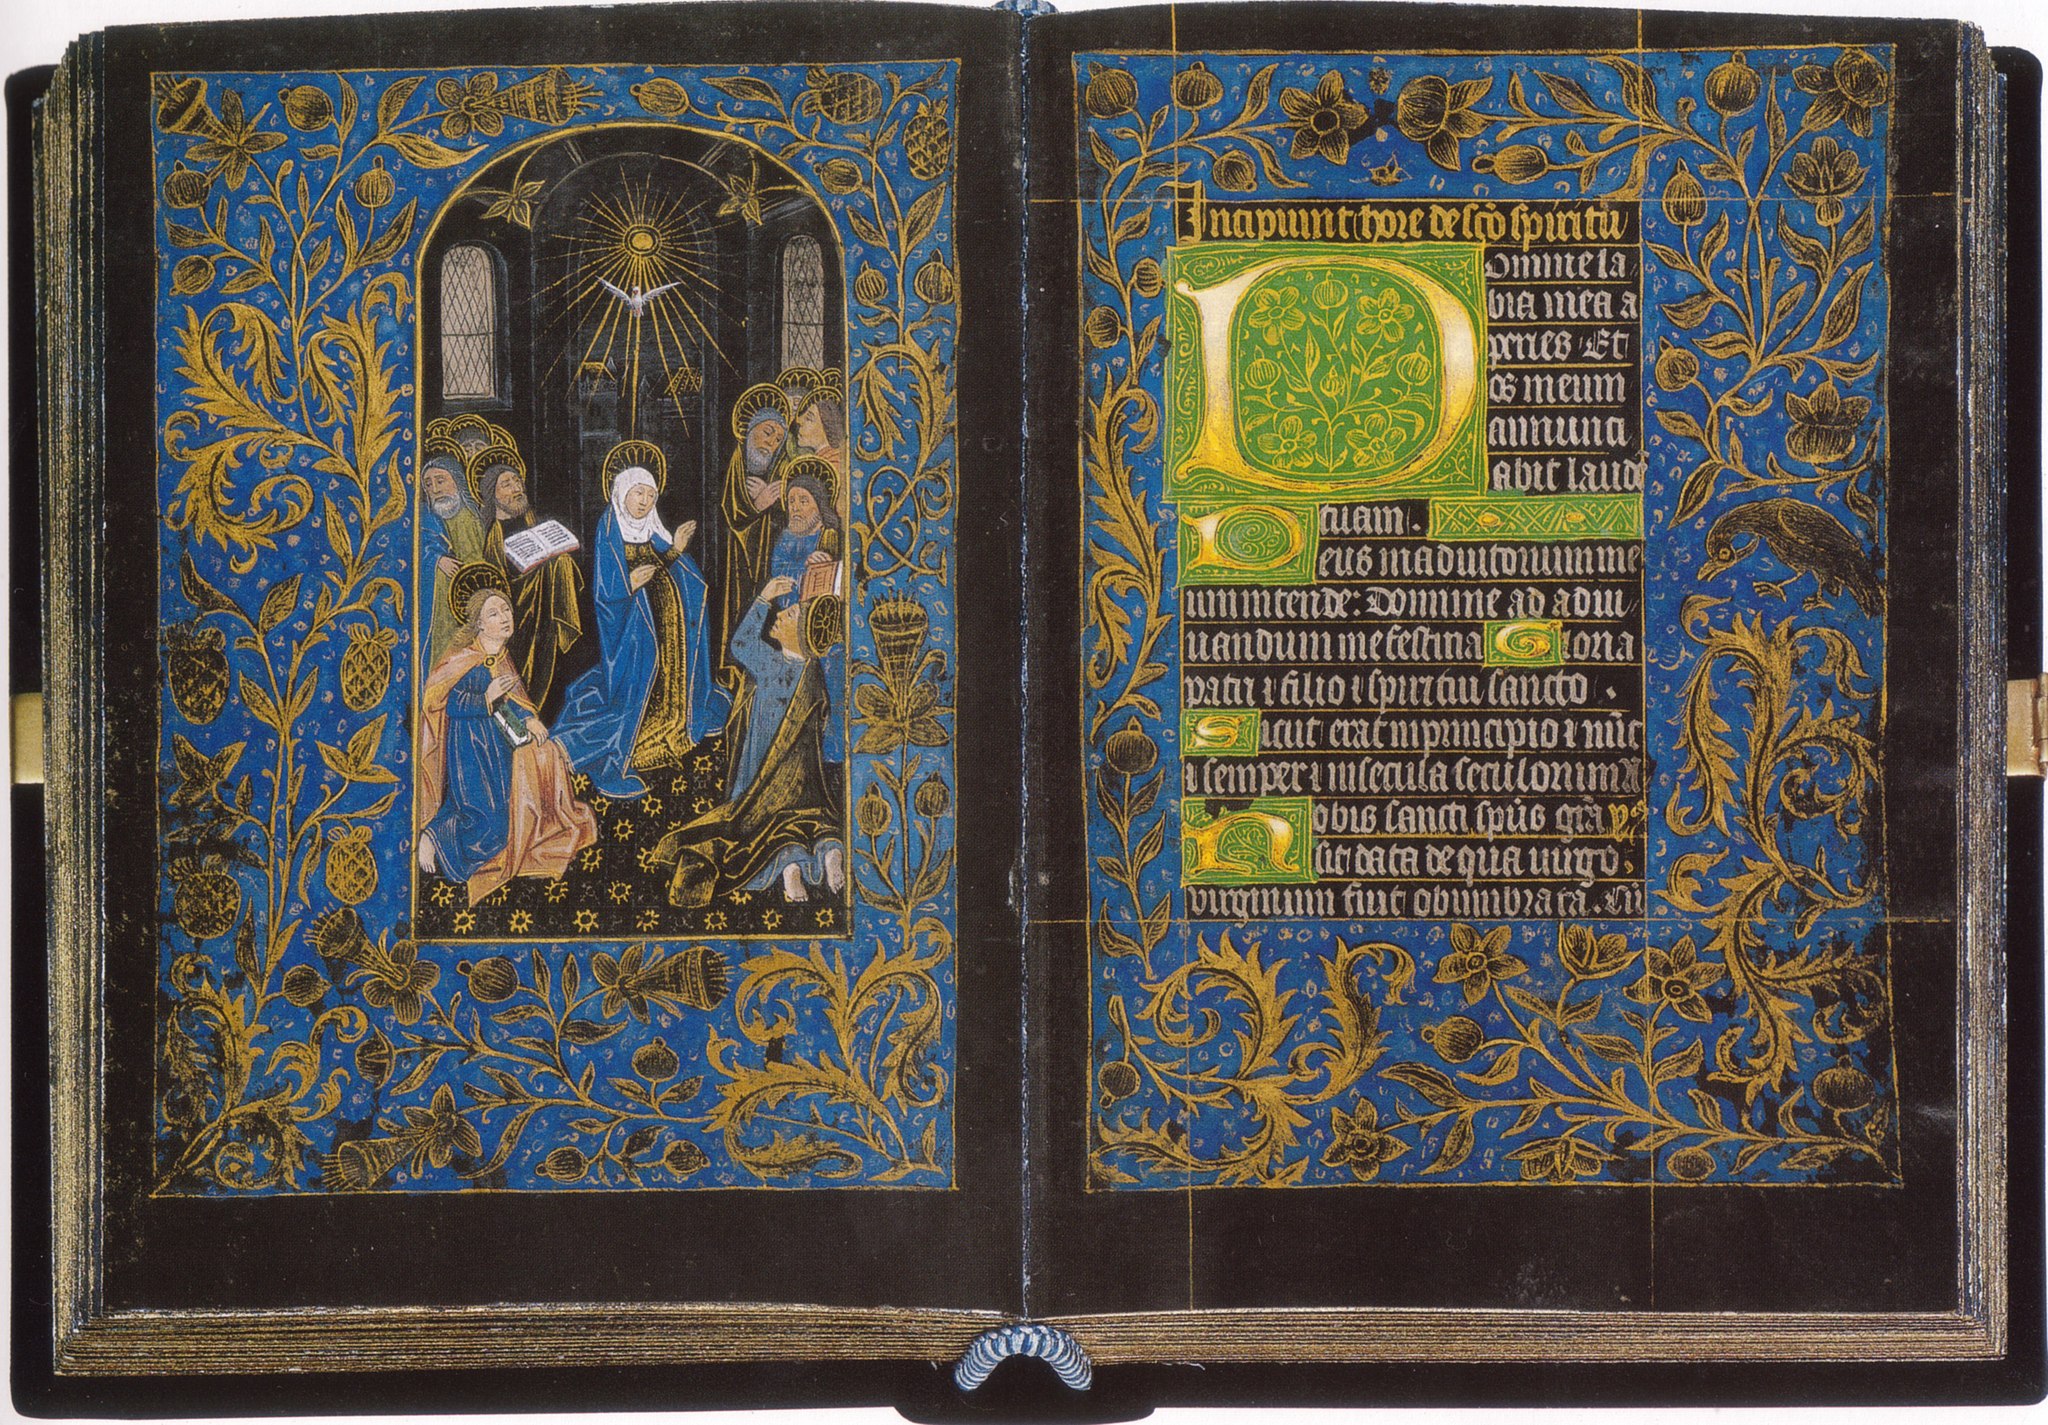 Illuminated manuscript, History, Production, & Facts